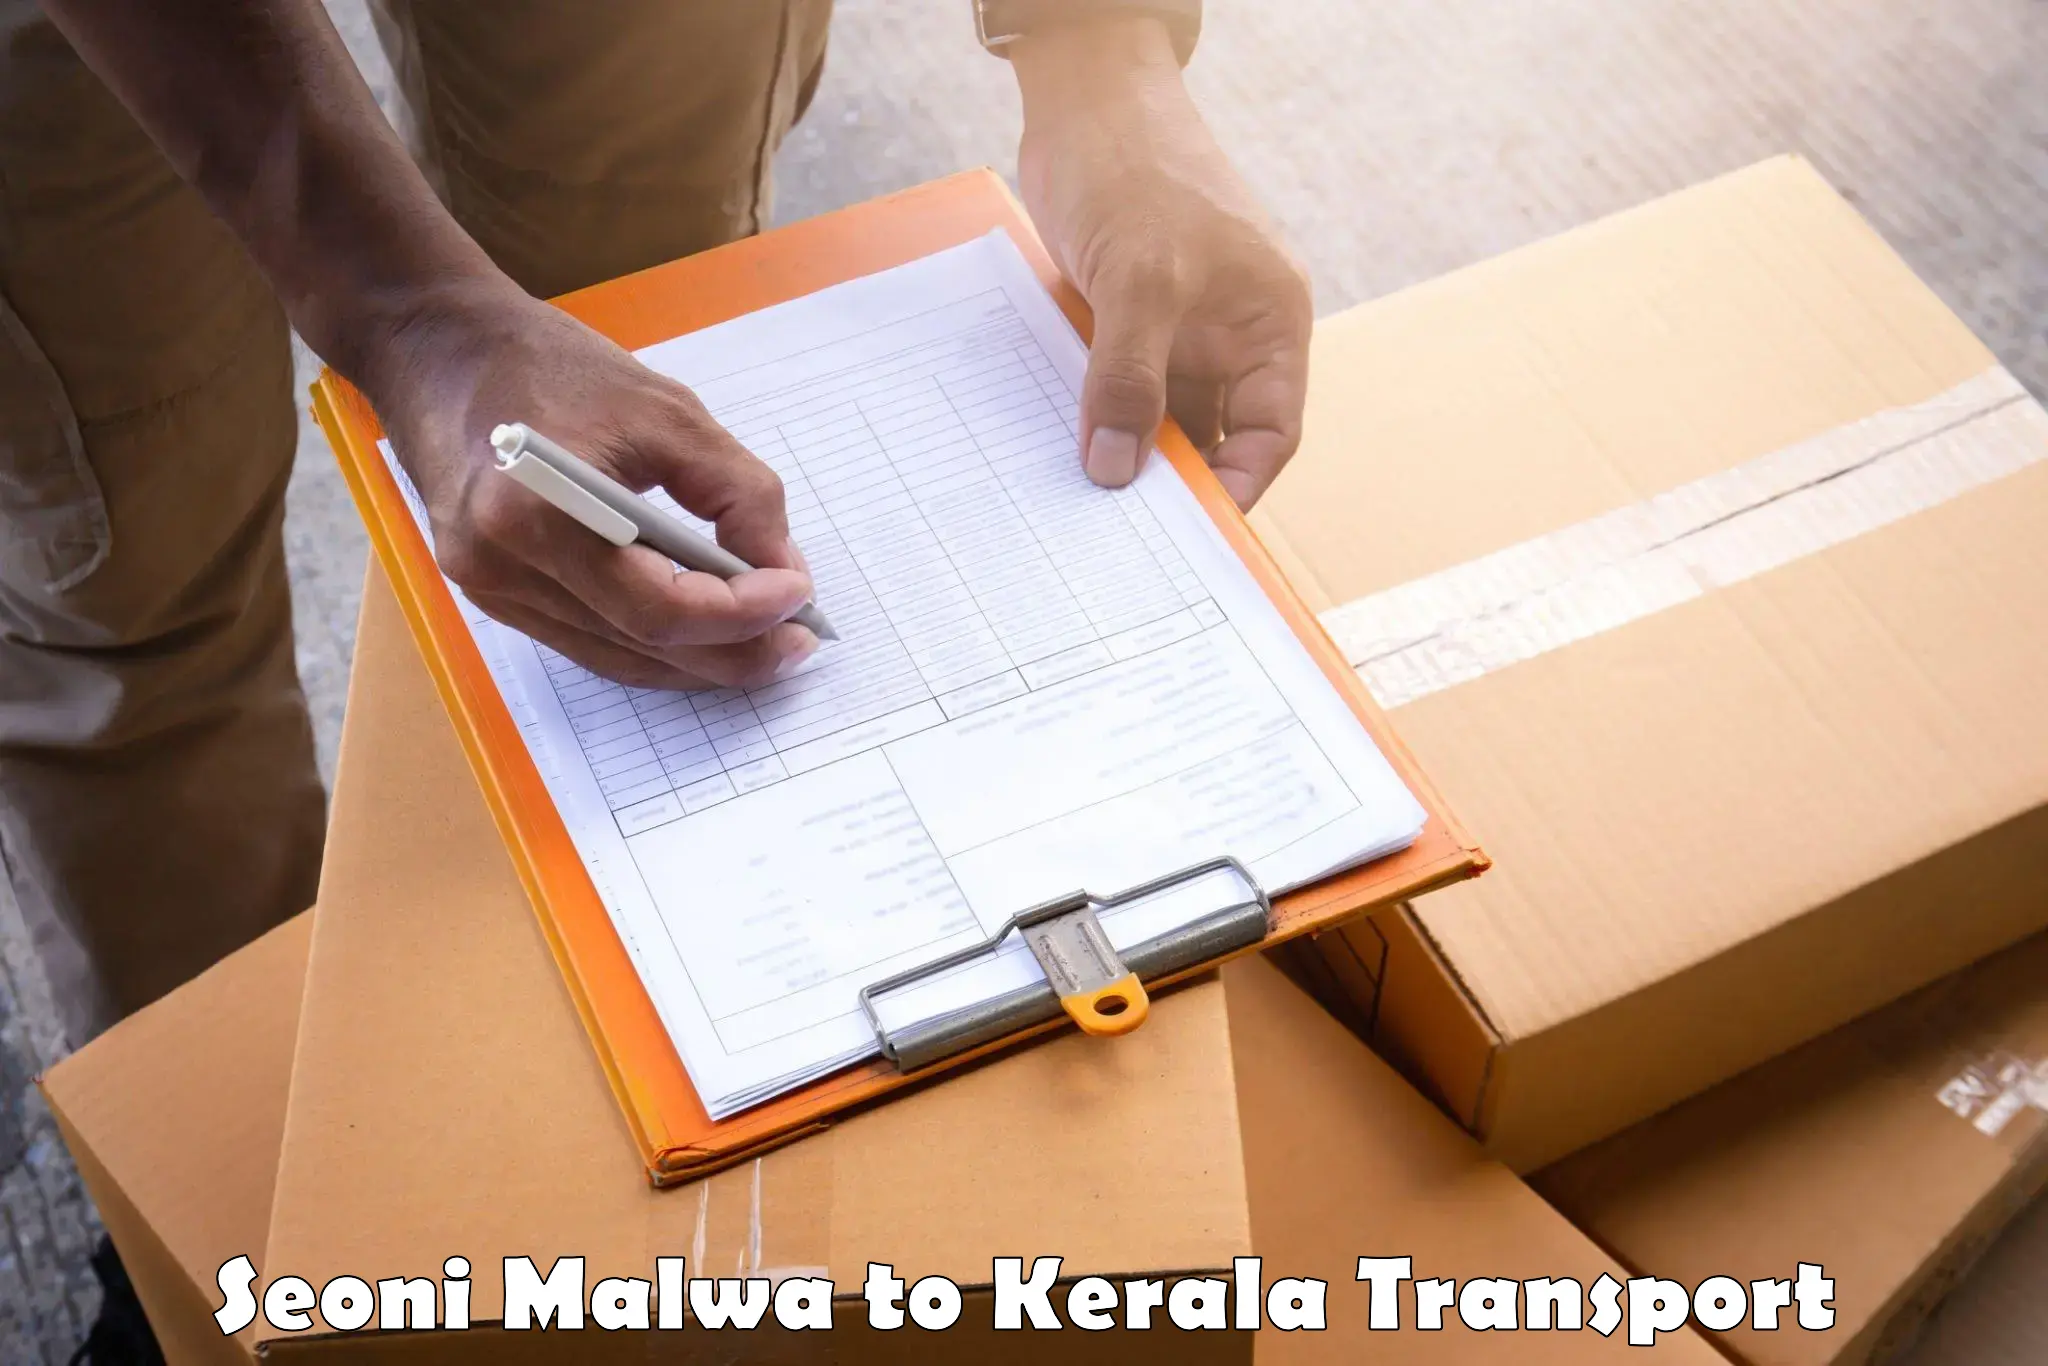 Delivery service Seoni Malwa to Ernakulam